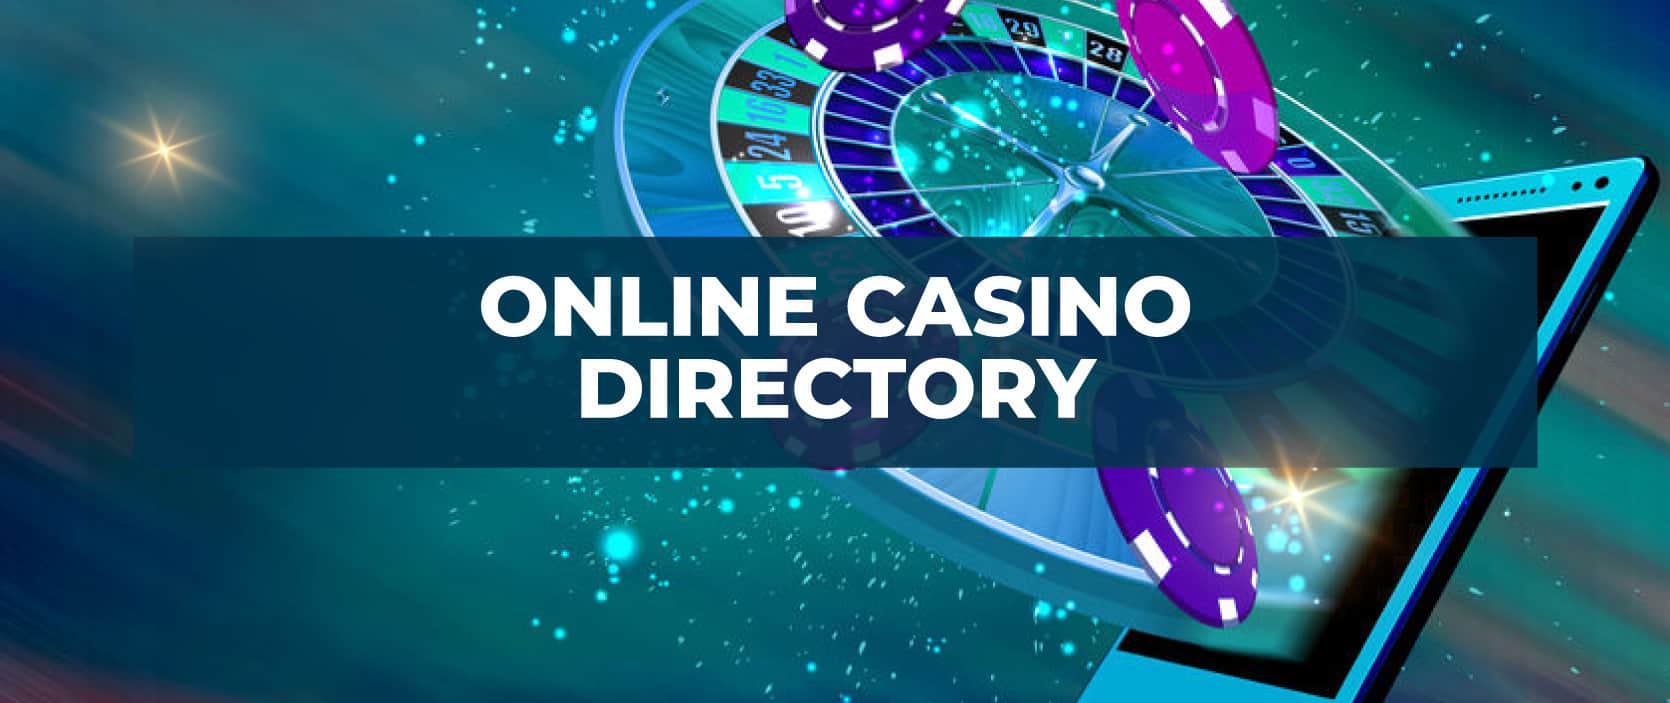 Online casino games in india